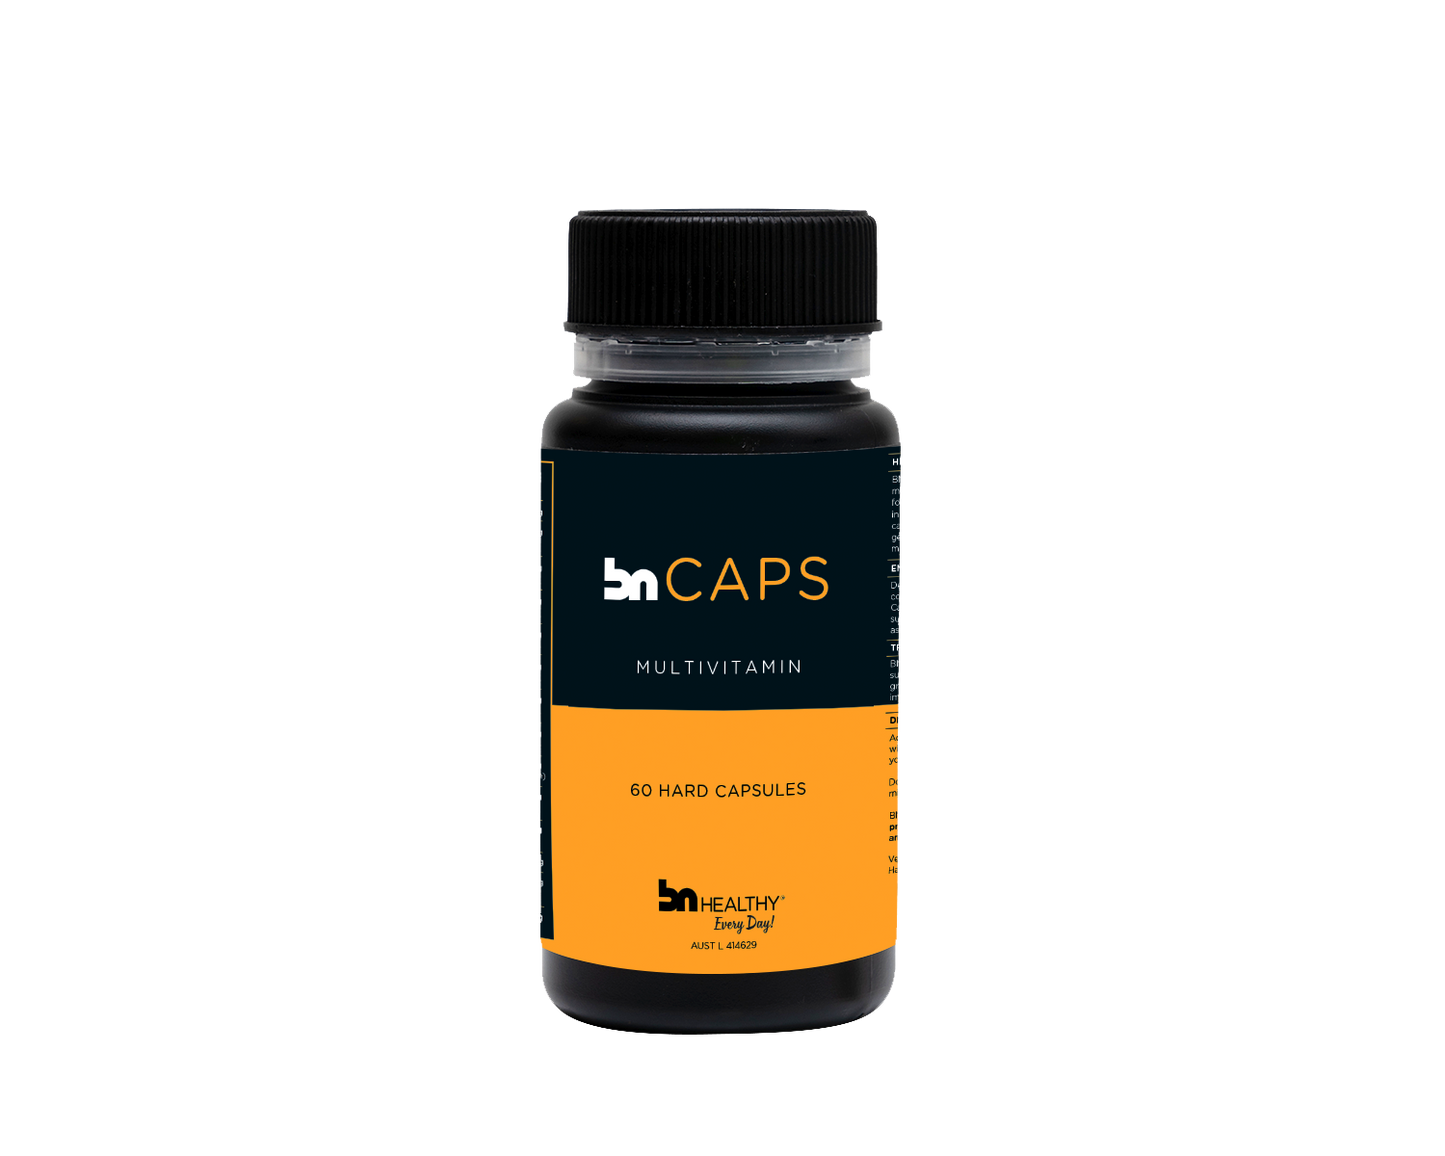 BN Chews & BN Caps - Multi-Vitamin Mix - 3 Months